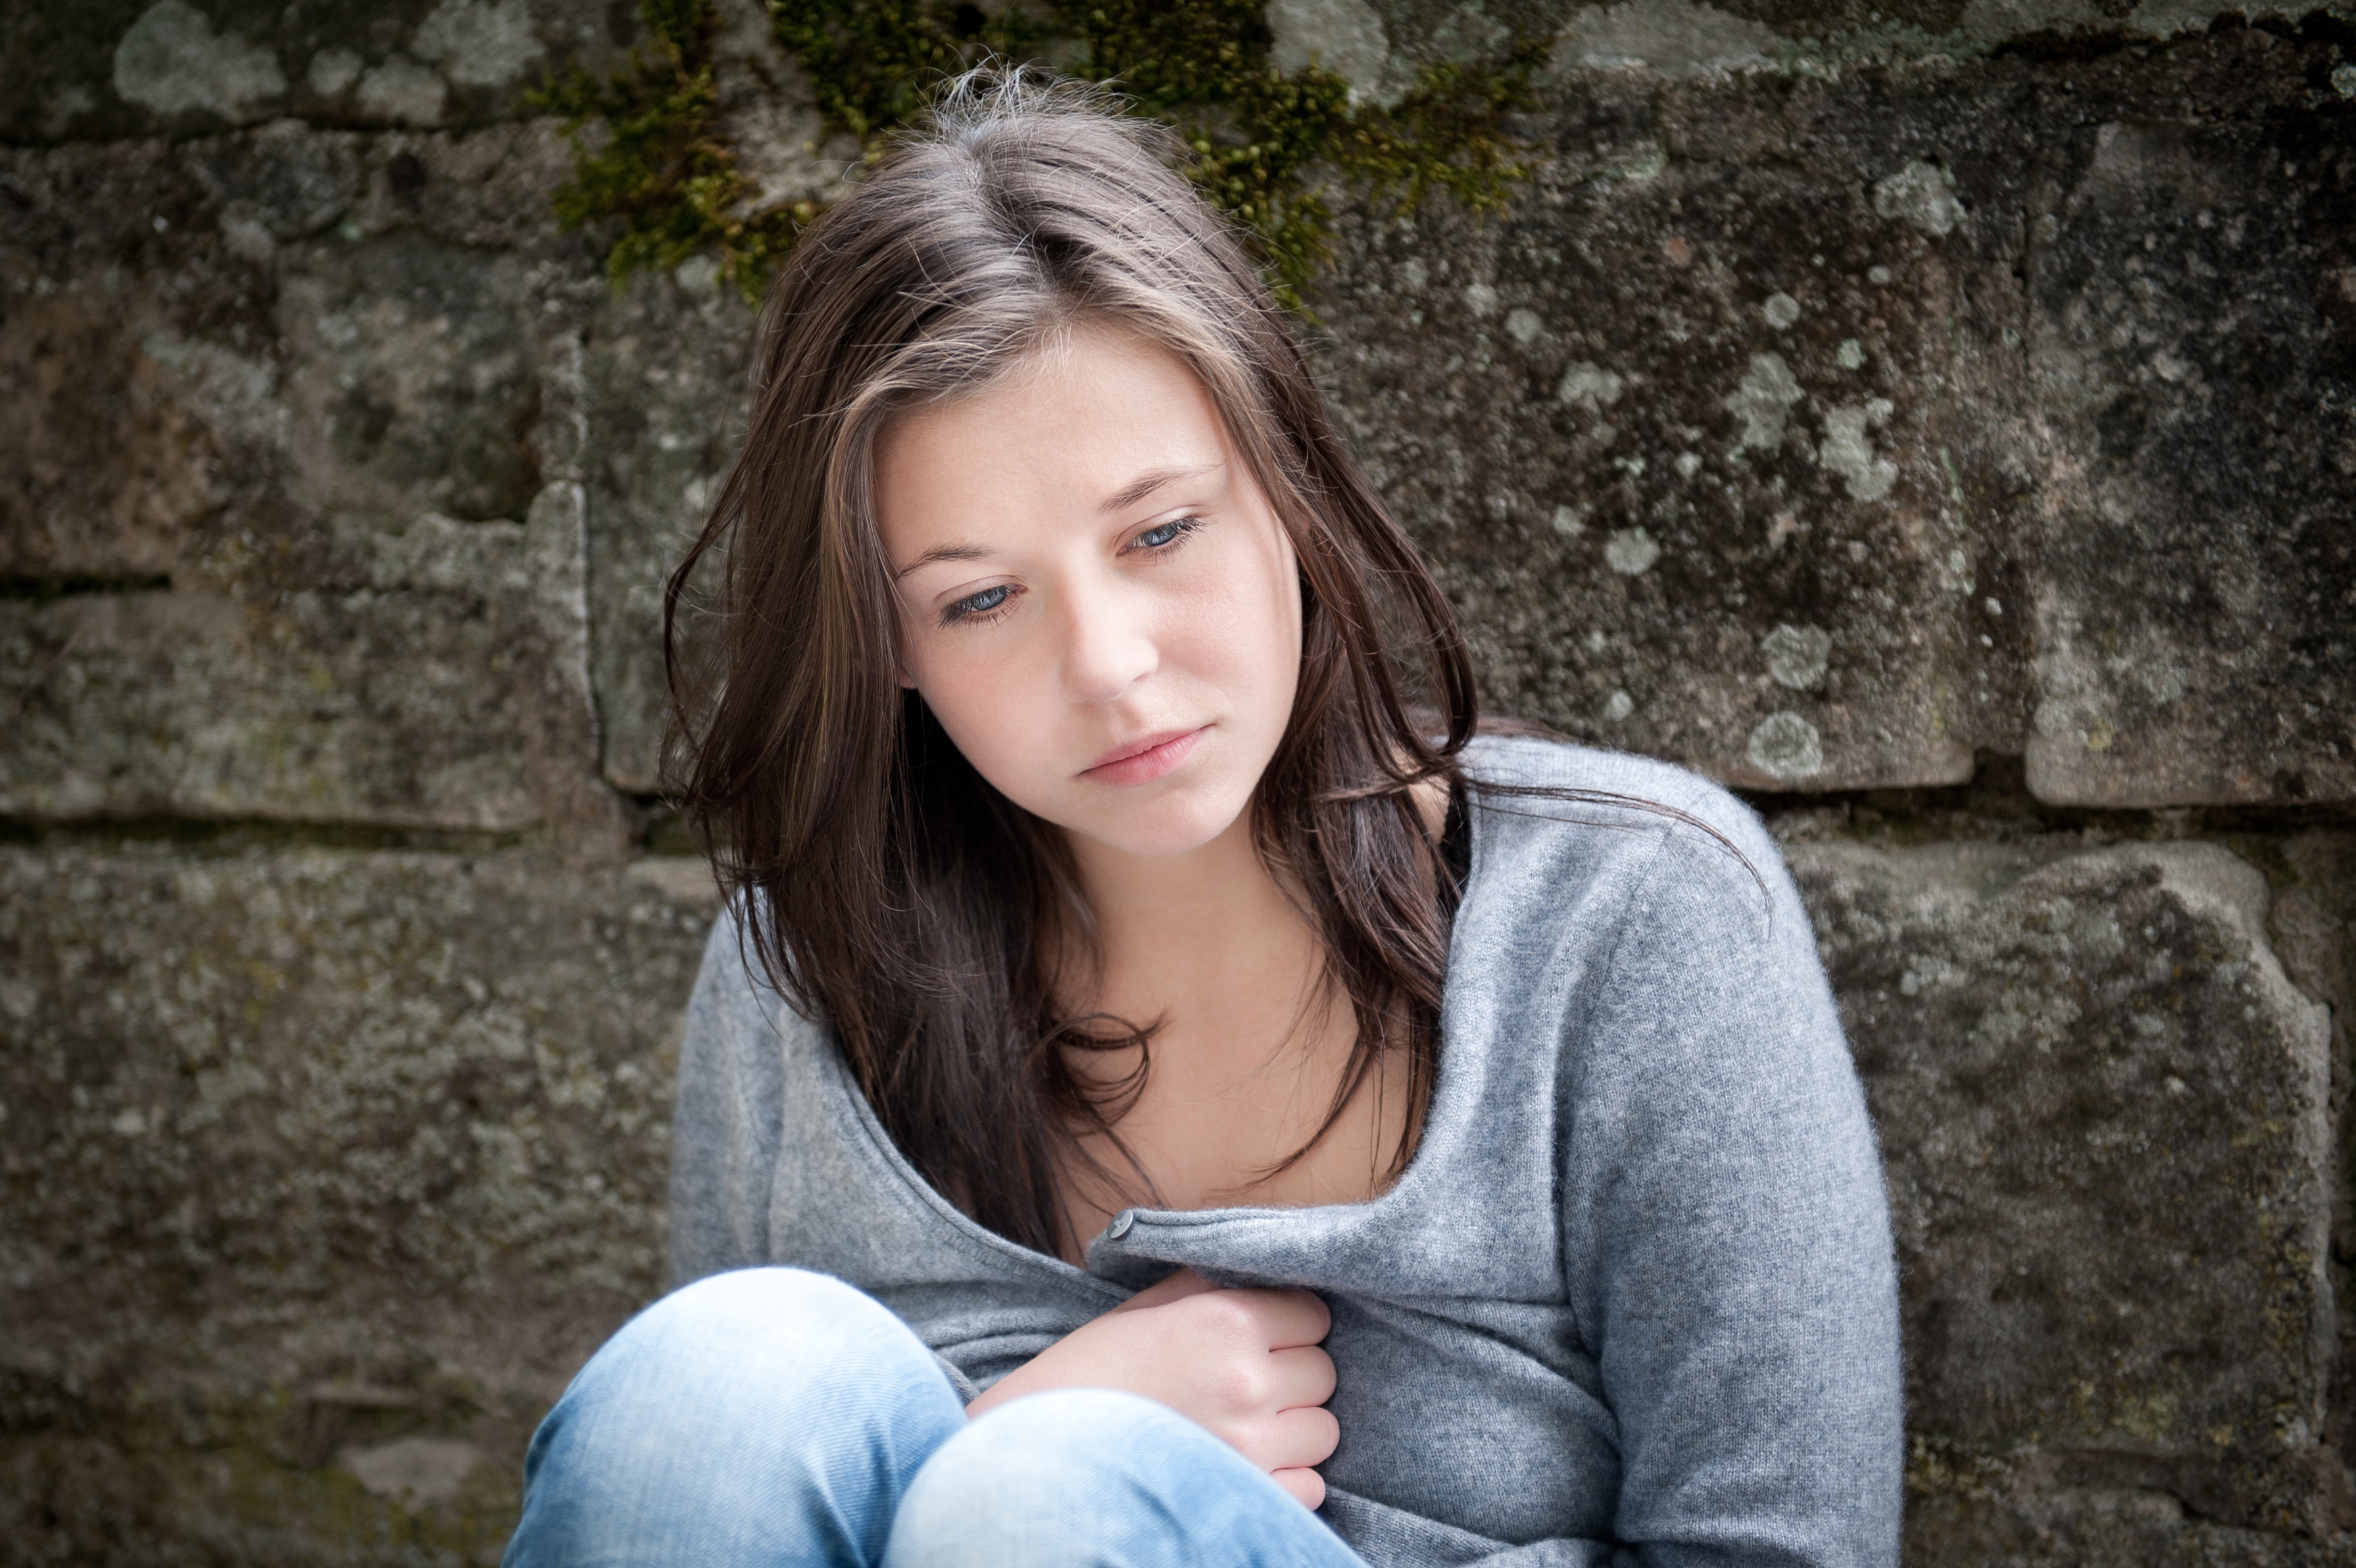 Une adolescente à l'air triste | Source : Shutterstock